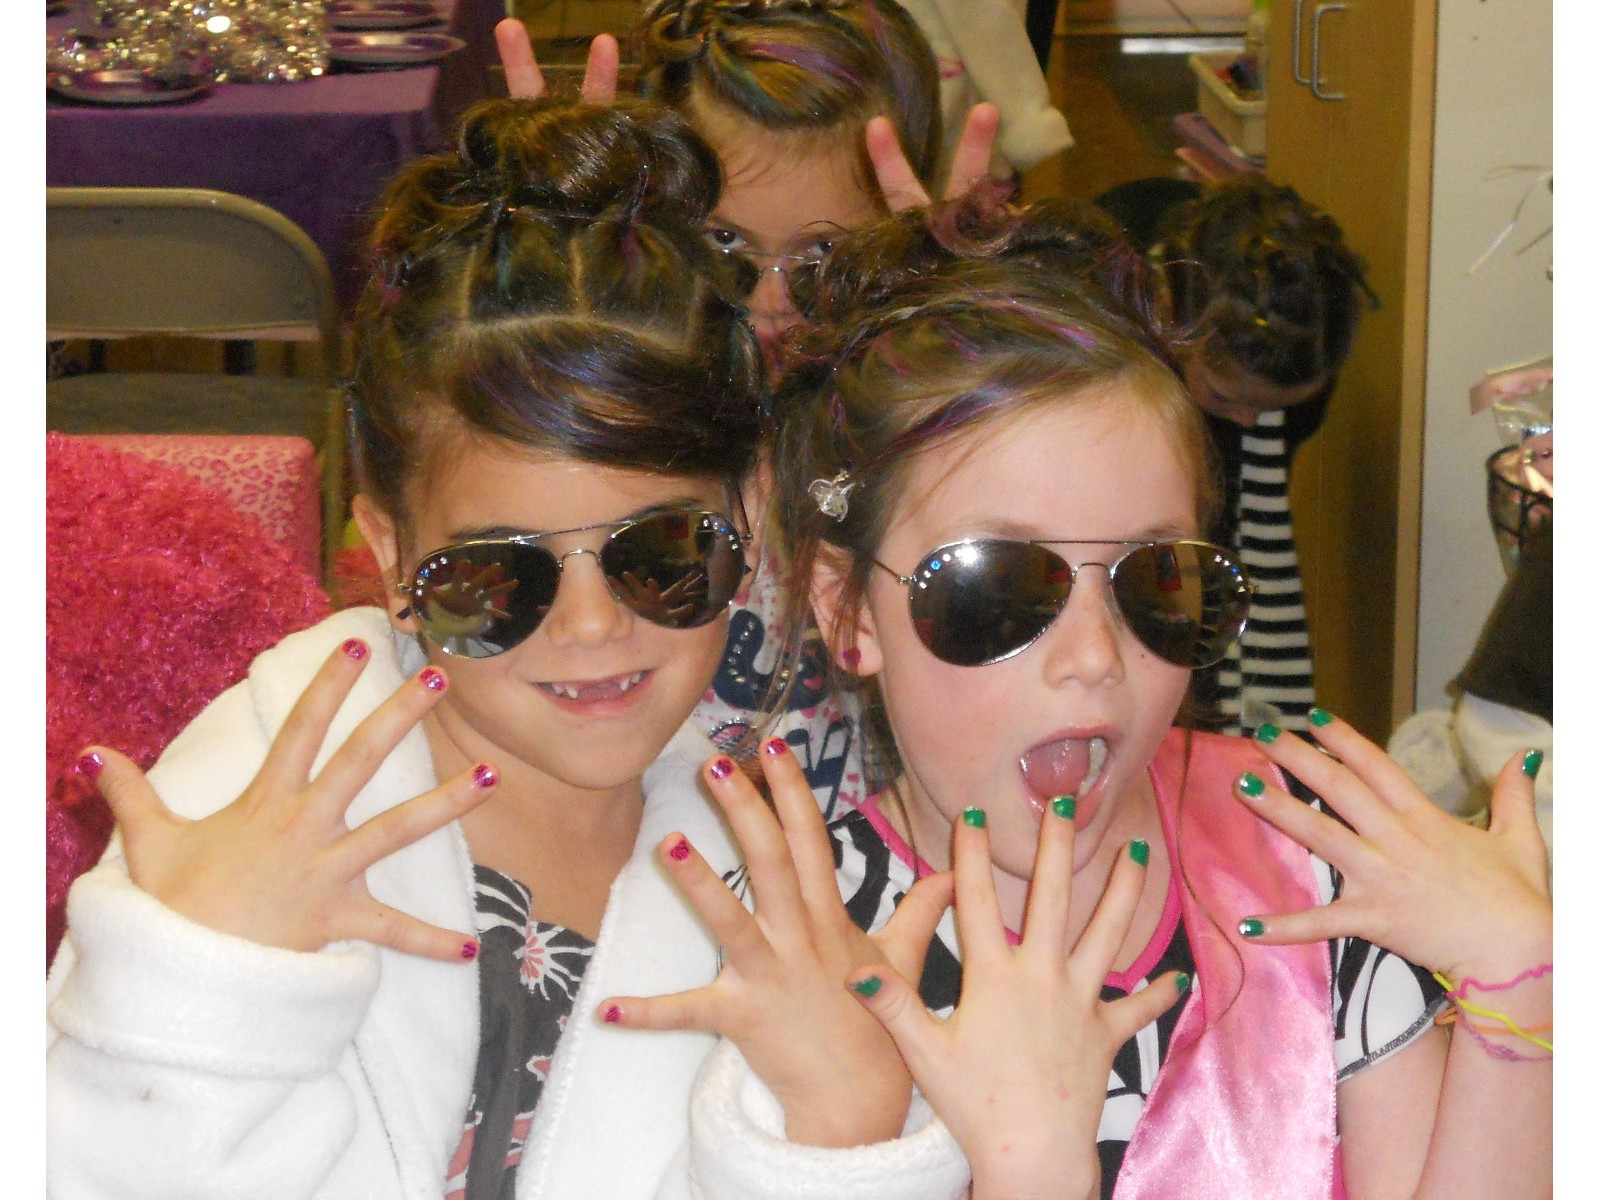 Brat Pack - Kids Salon And Spa Parties In Redmond